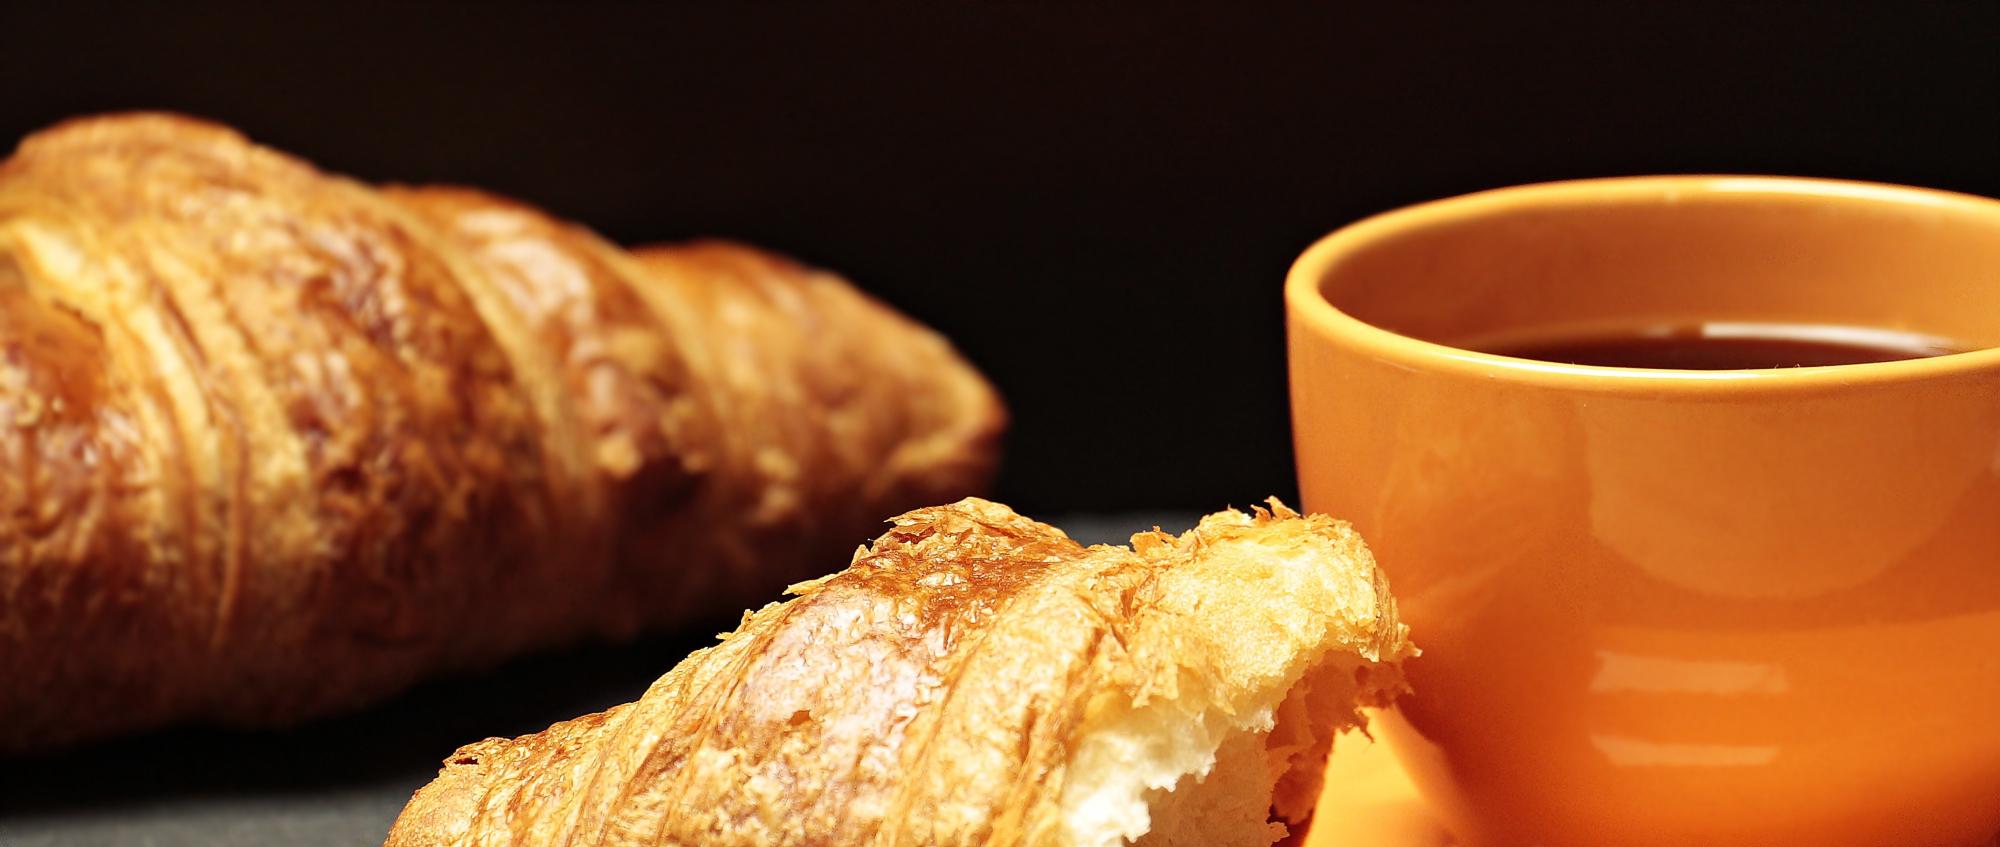 blur-bread-breakfast-461313